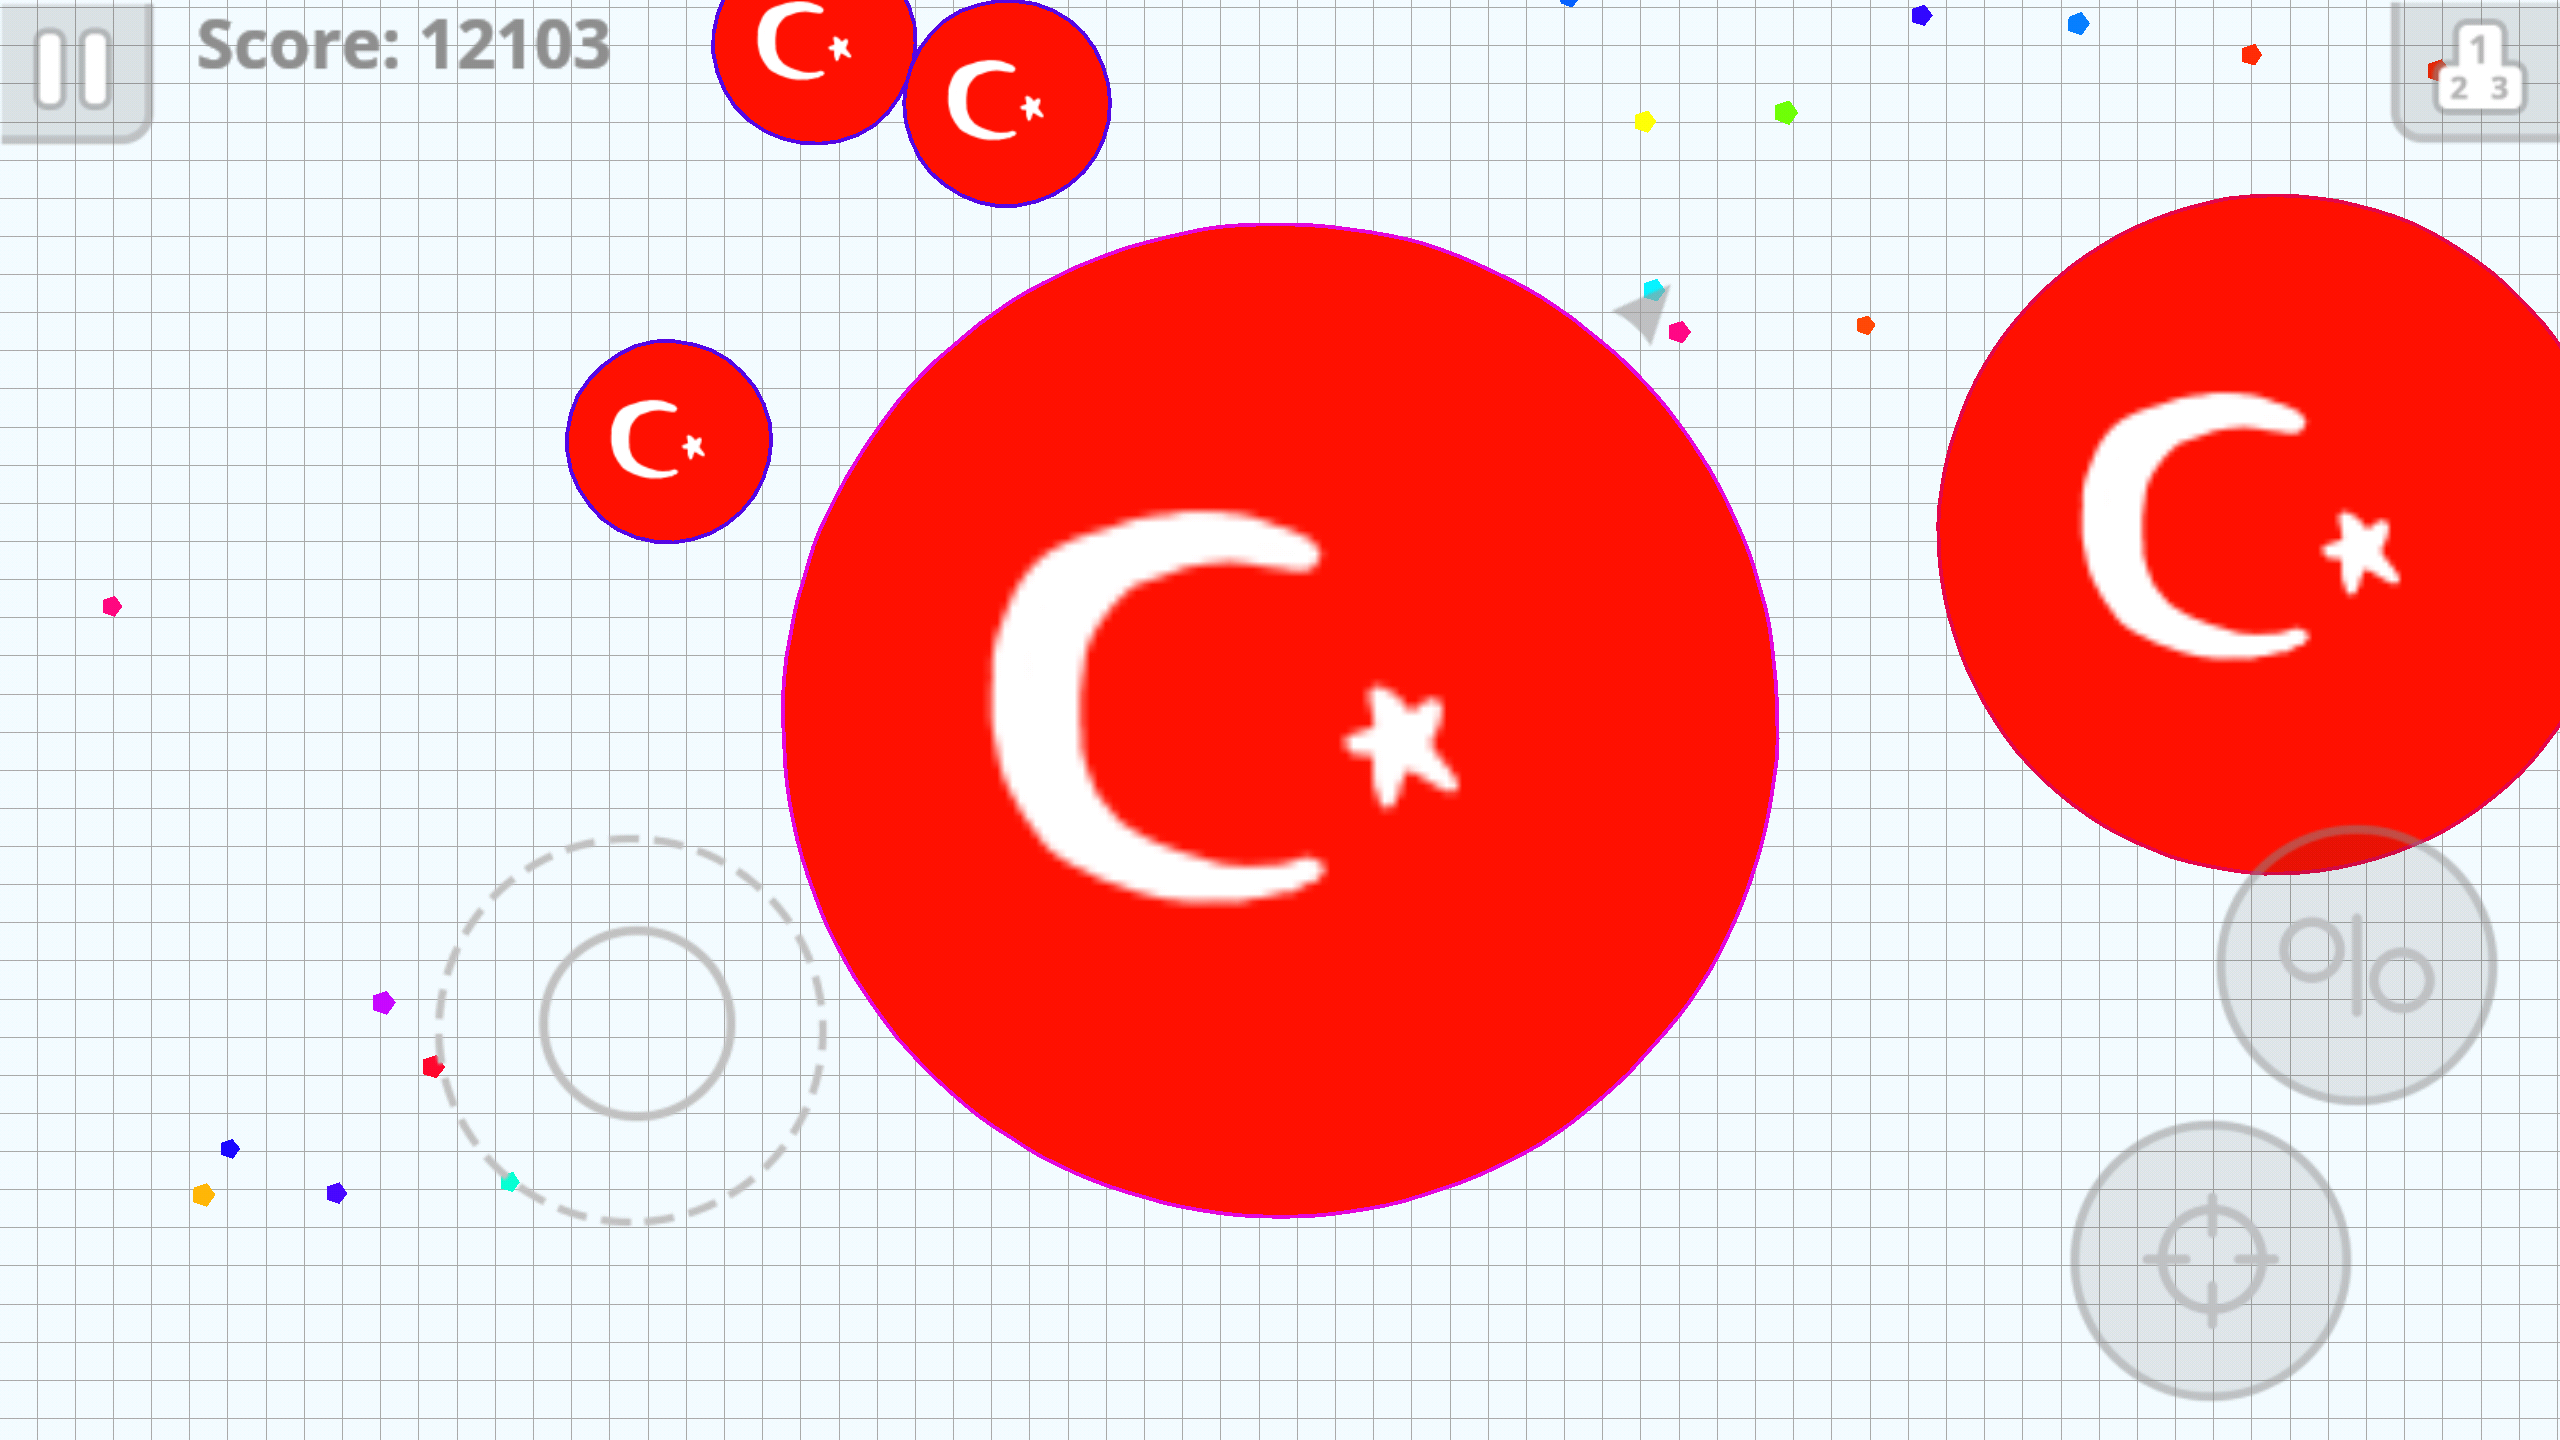  Agar.io türk gücü